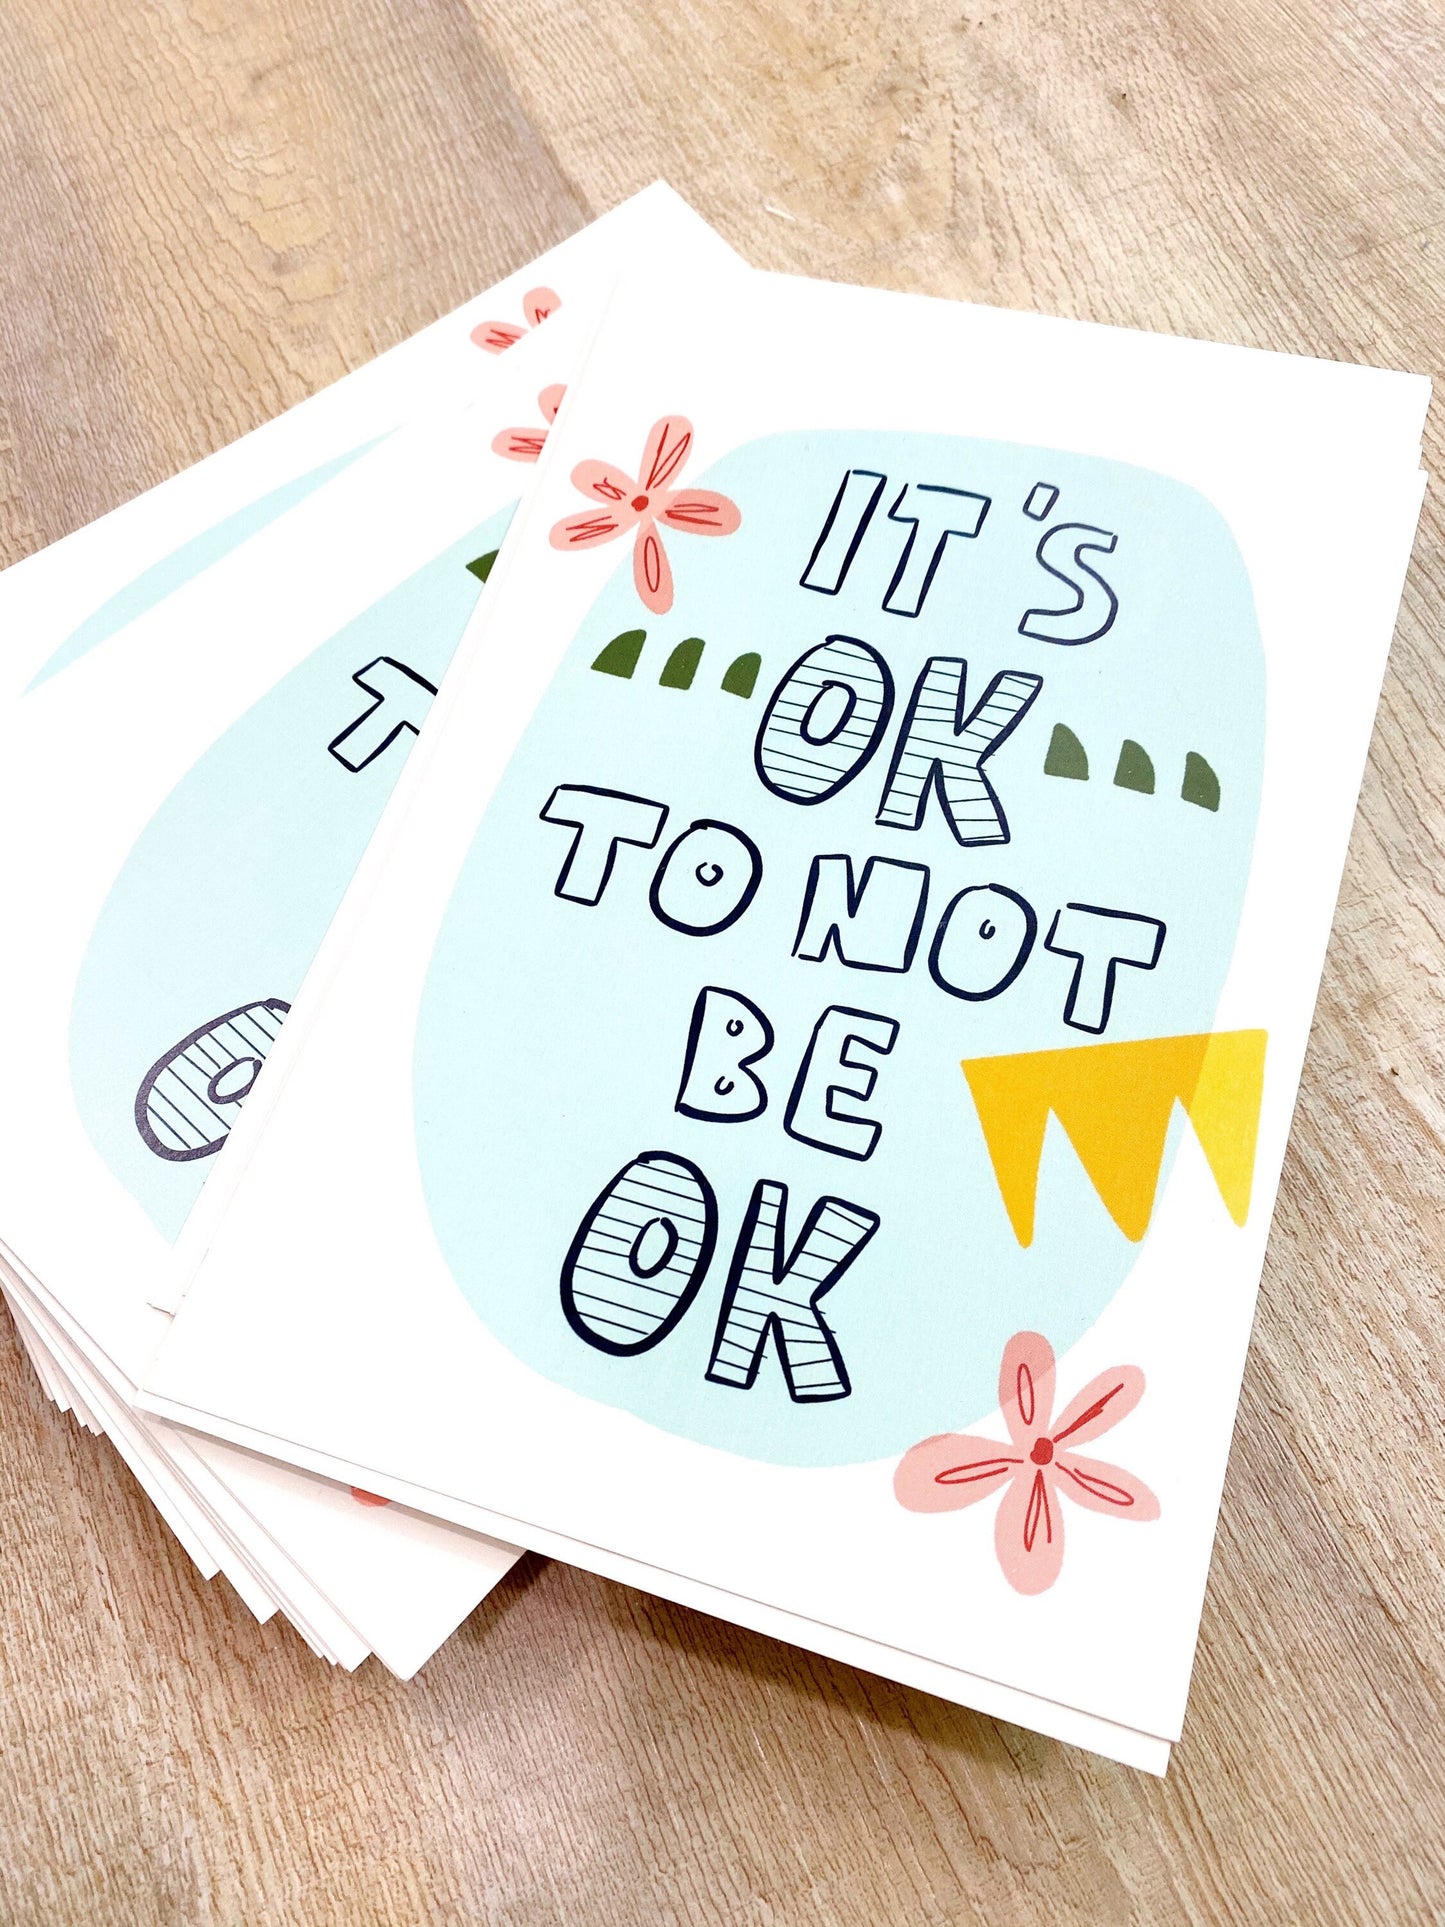 It's OK to not be OK - Art Print